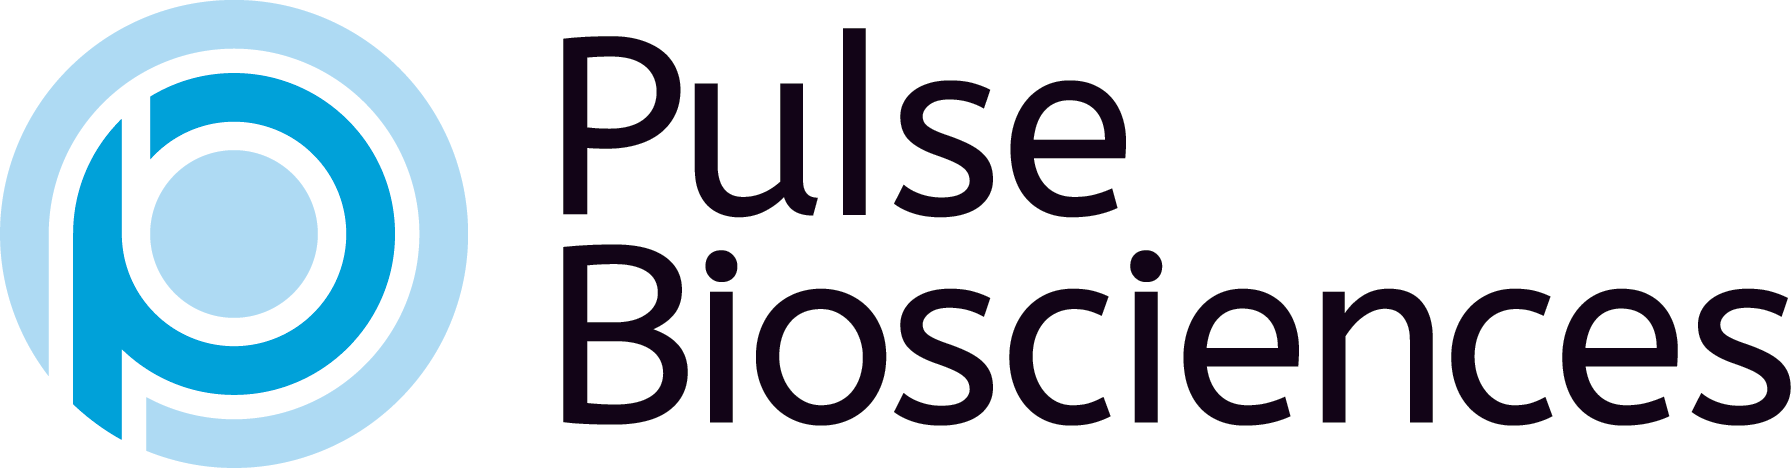 Pulse Biosciences